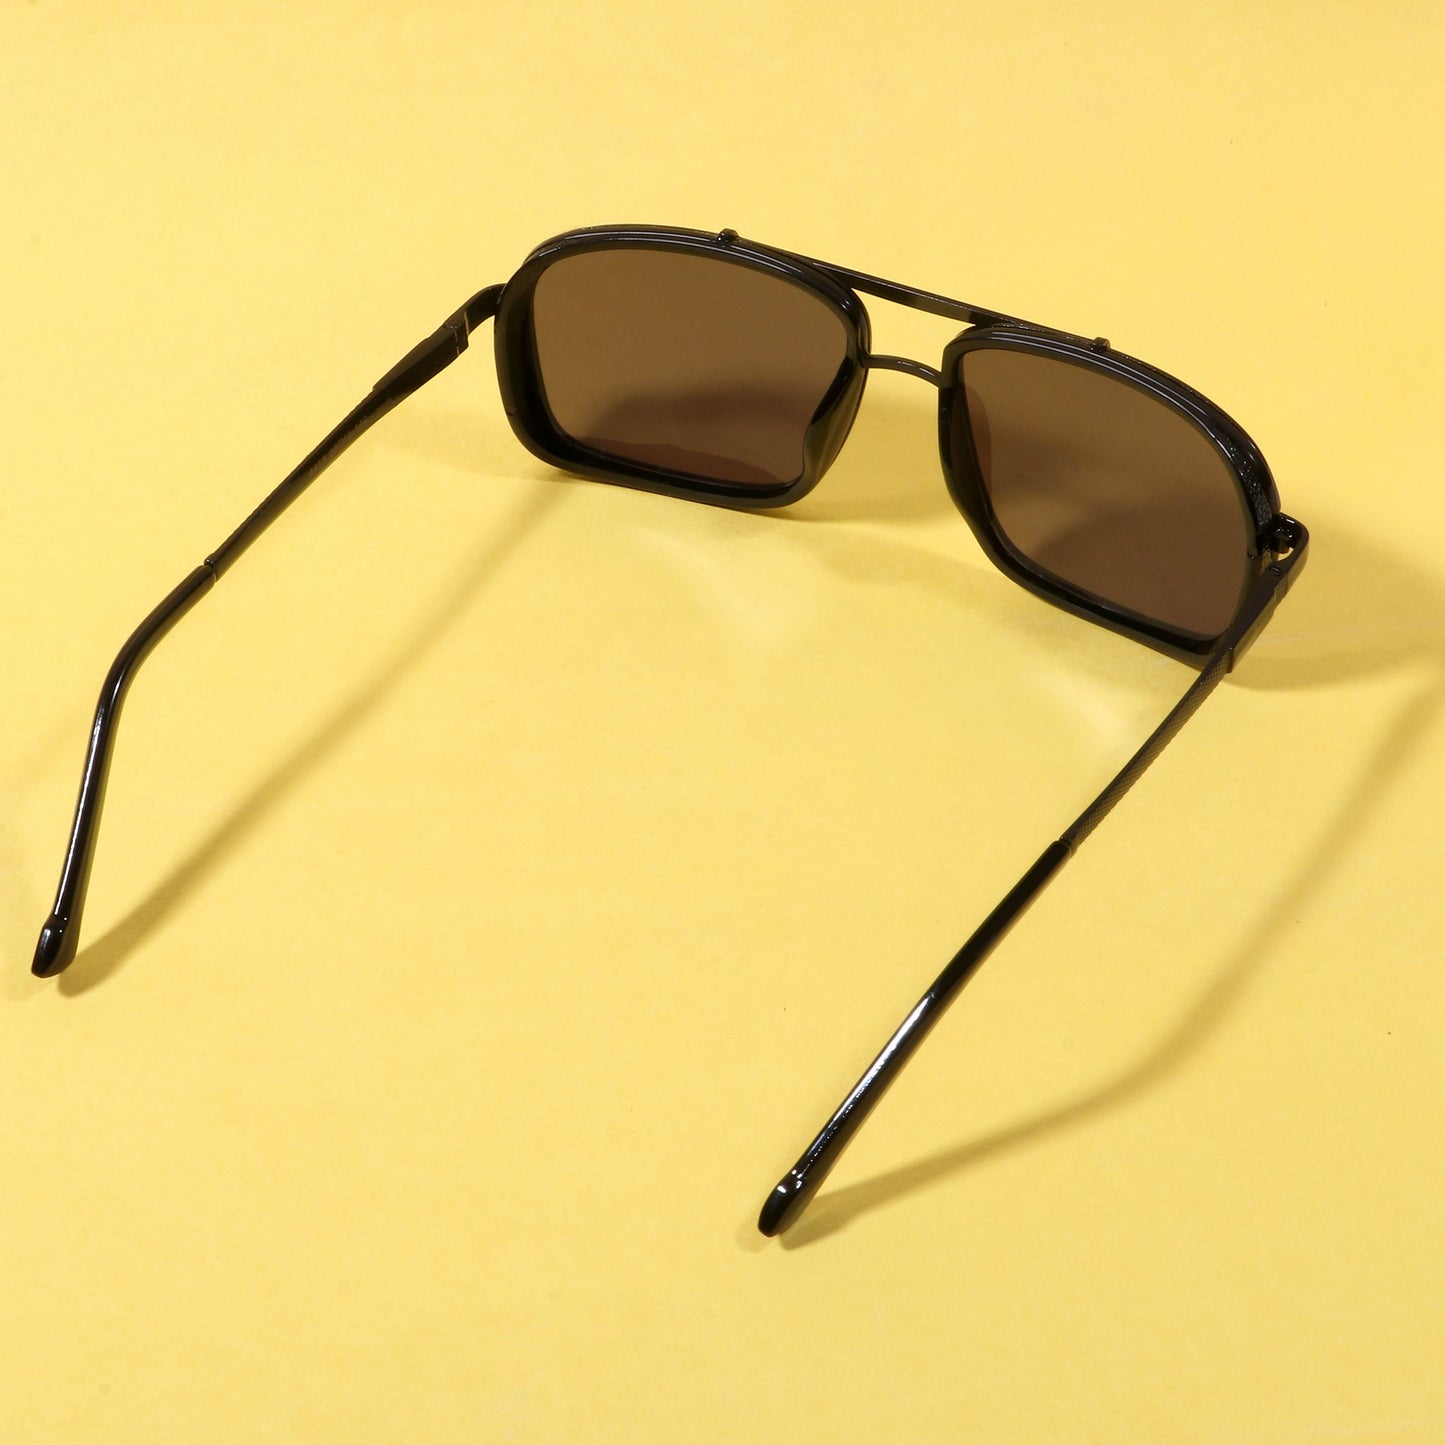 classy york Black And black Edition Rectangular Sunglasses